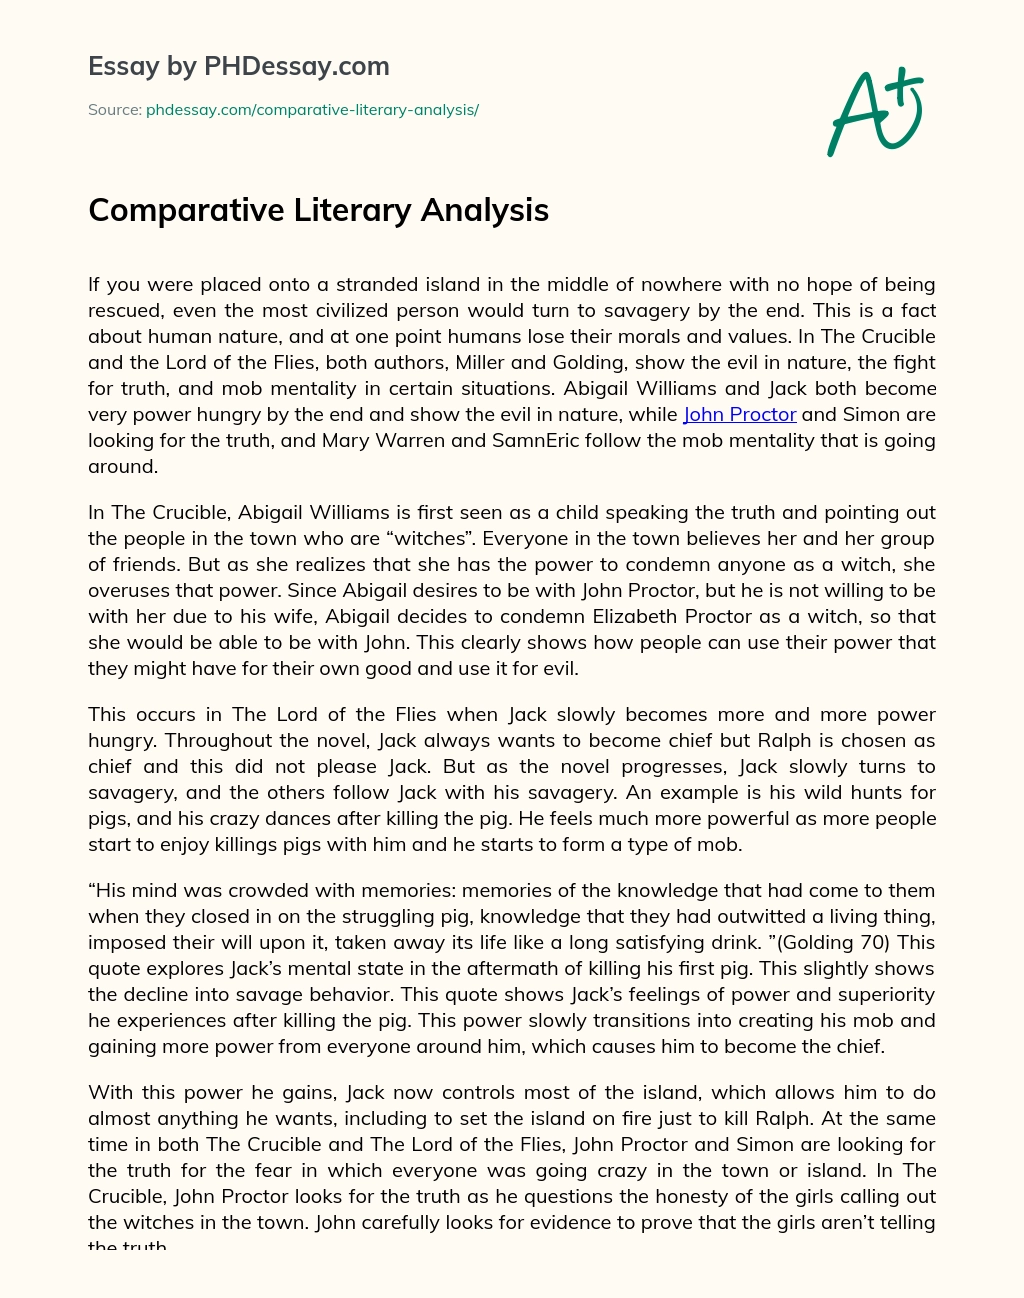 Comparative Literary Analysis essay